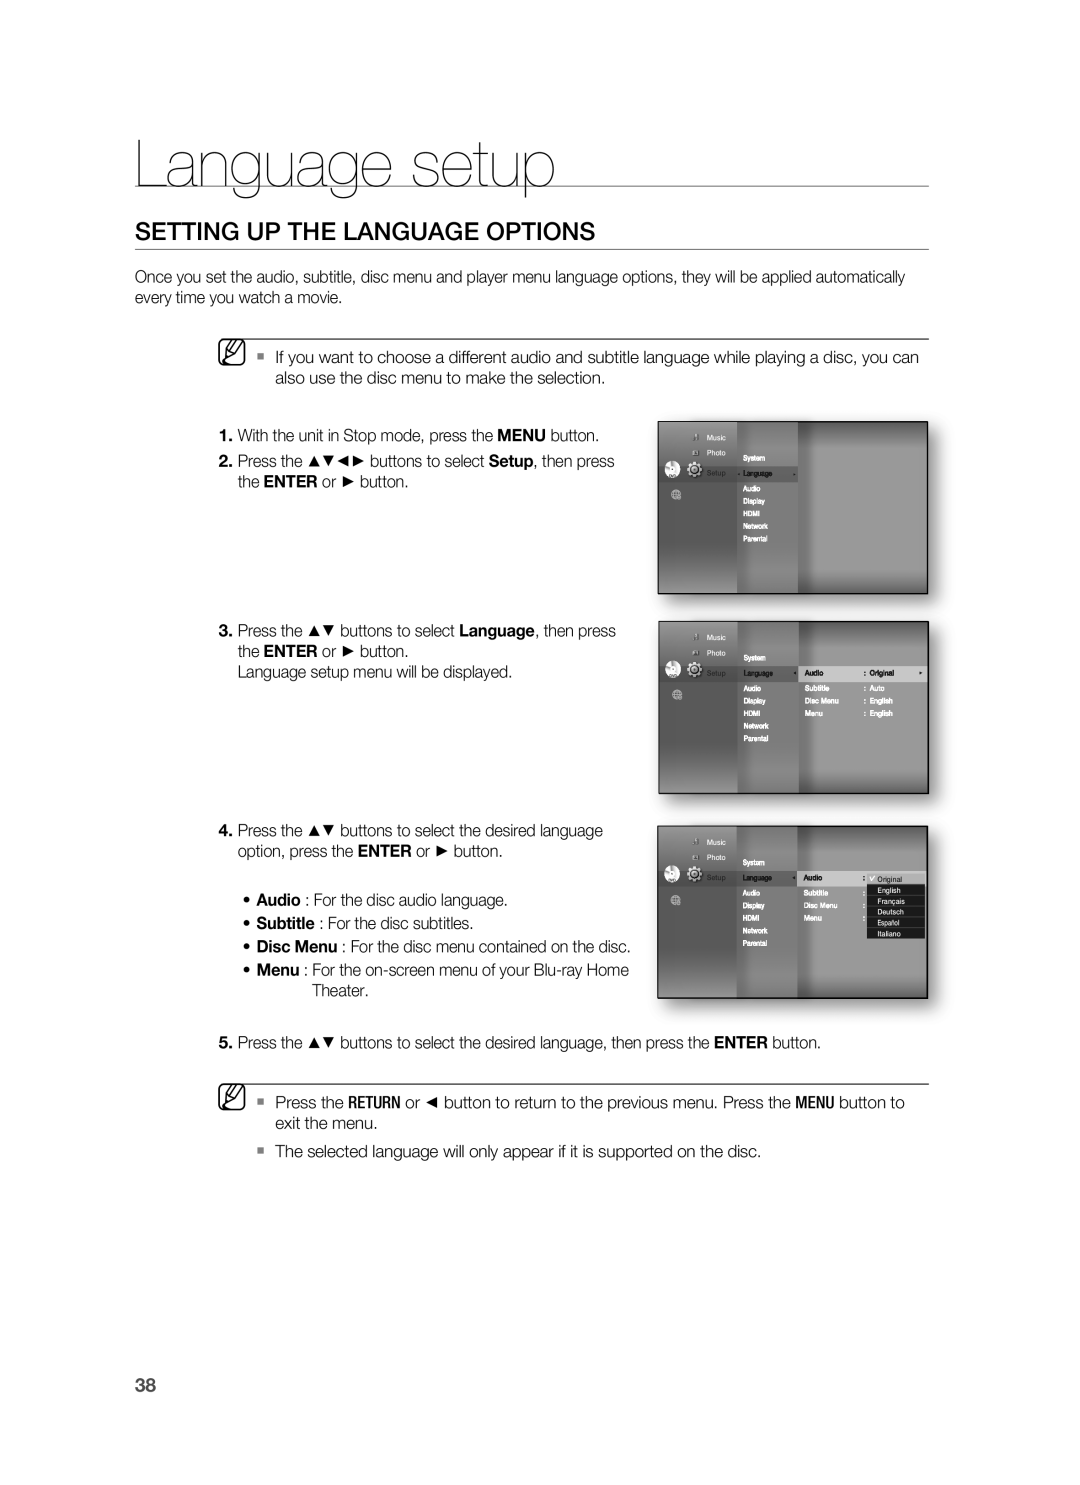 Samsung HT-BD3252 user manual Language setup, Setting Up The Language Options 